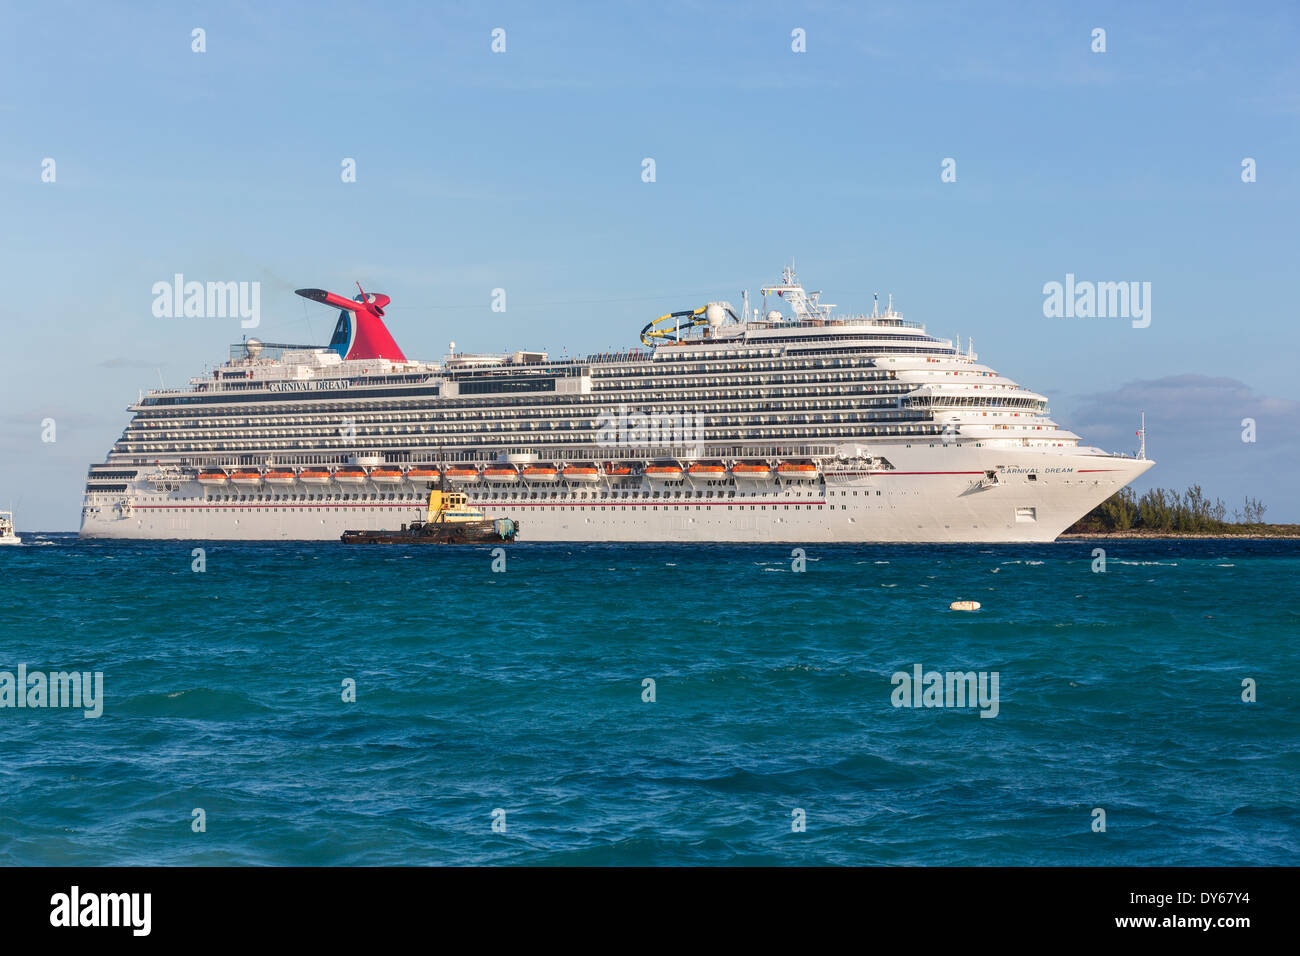 The Carnival Dream cruise ship entering the harbor Nassau, Bahamas, Caribbean Stock Photo